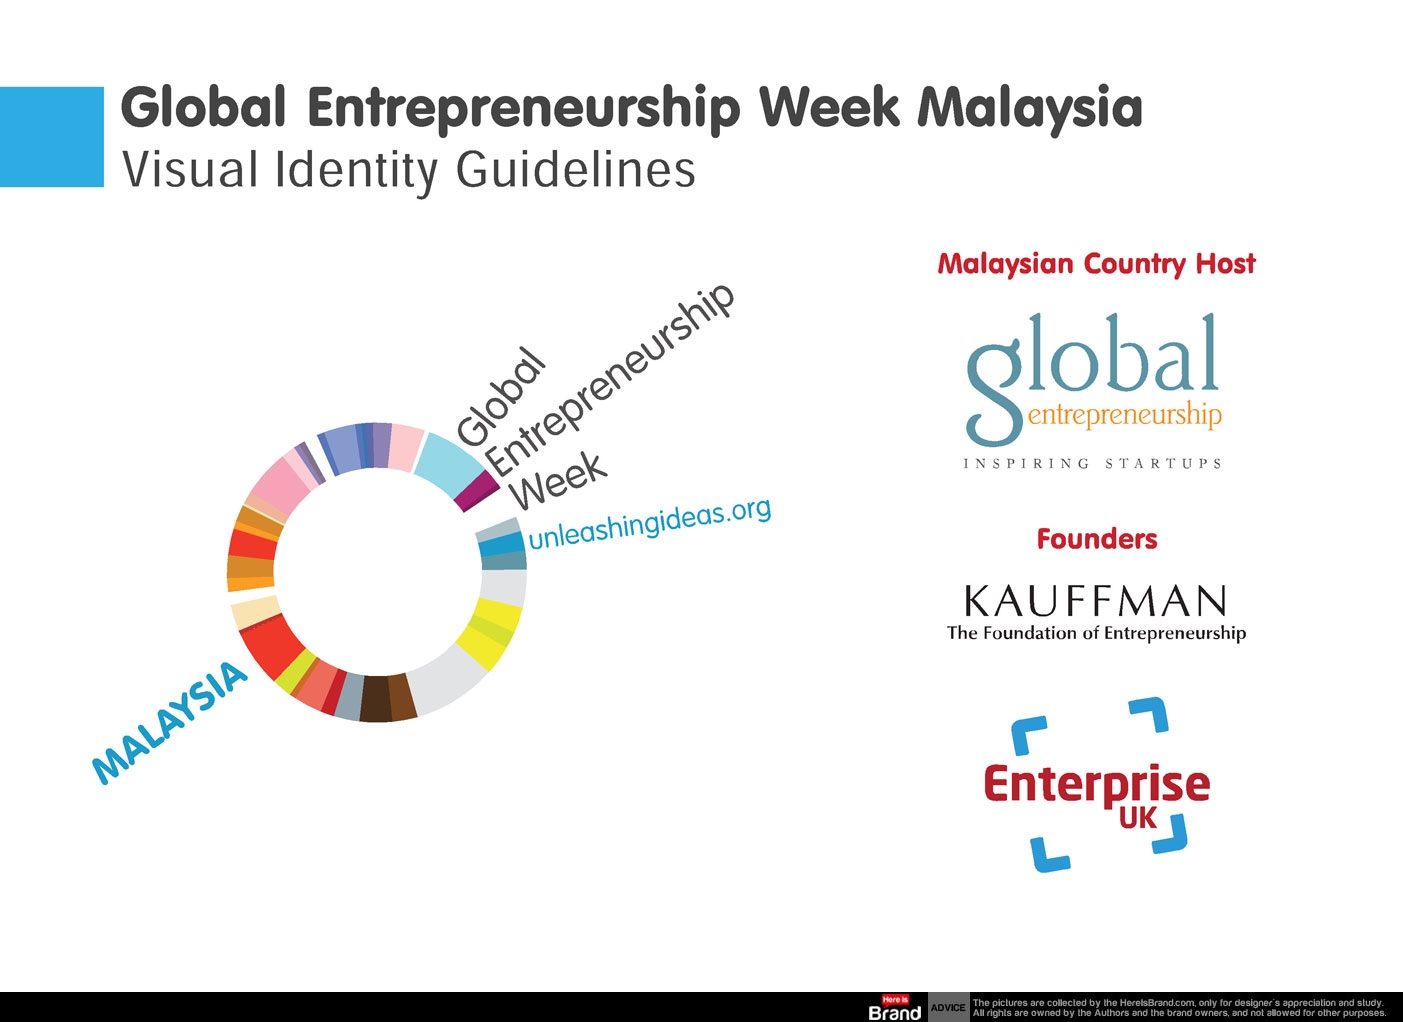 GEW Global Entrepreneurship Week Malaysia visual identity guidelines